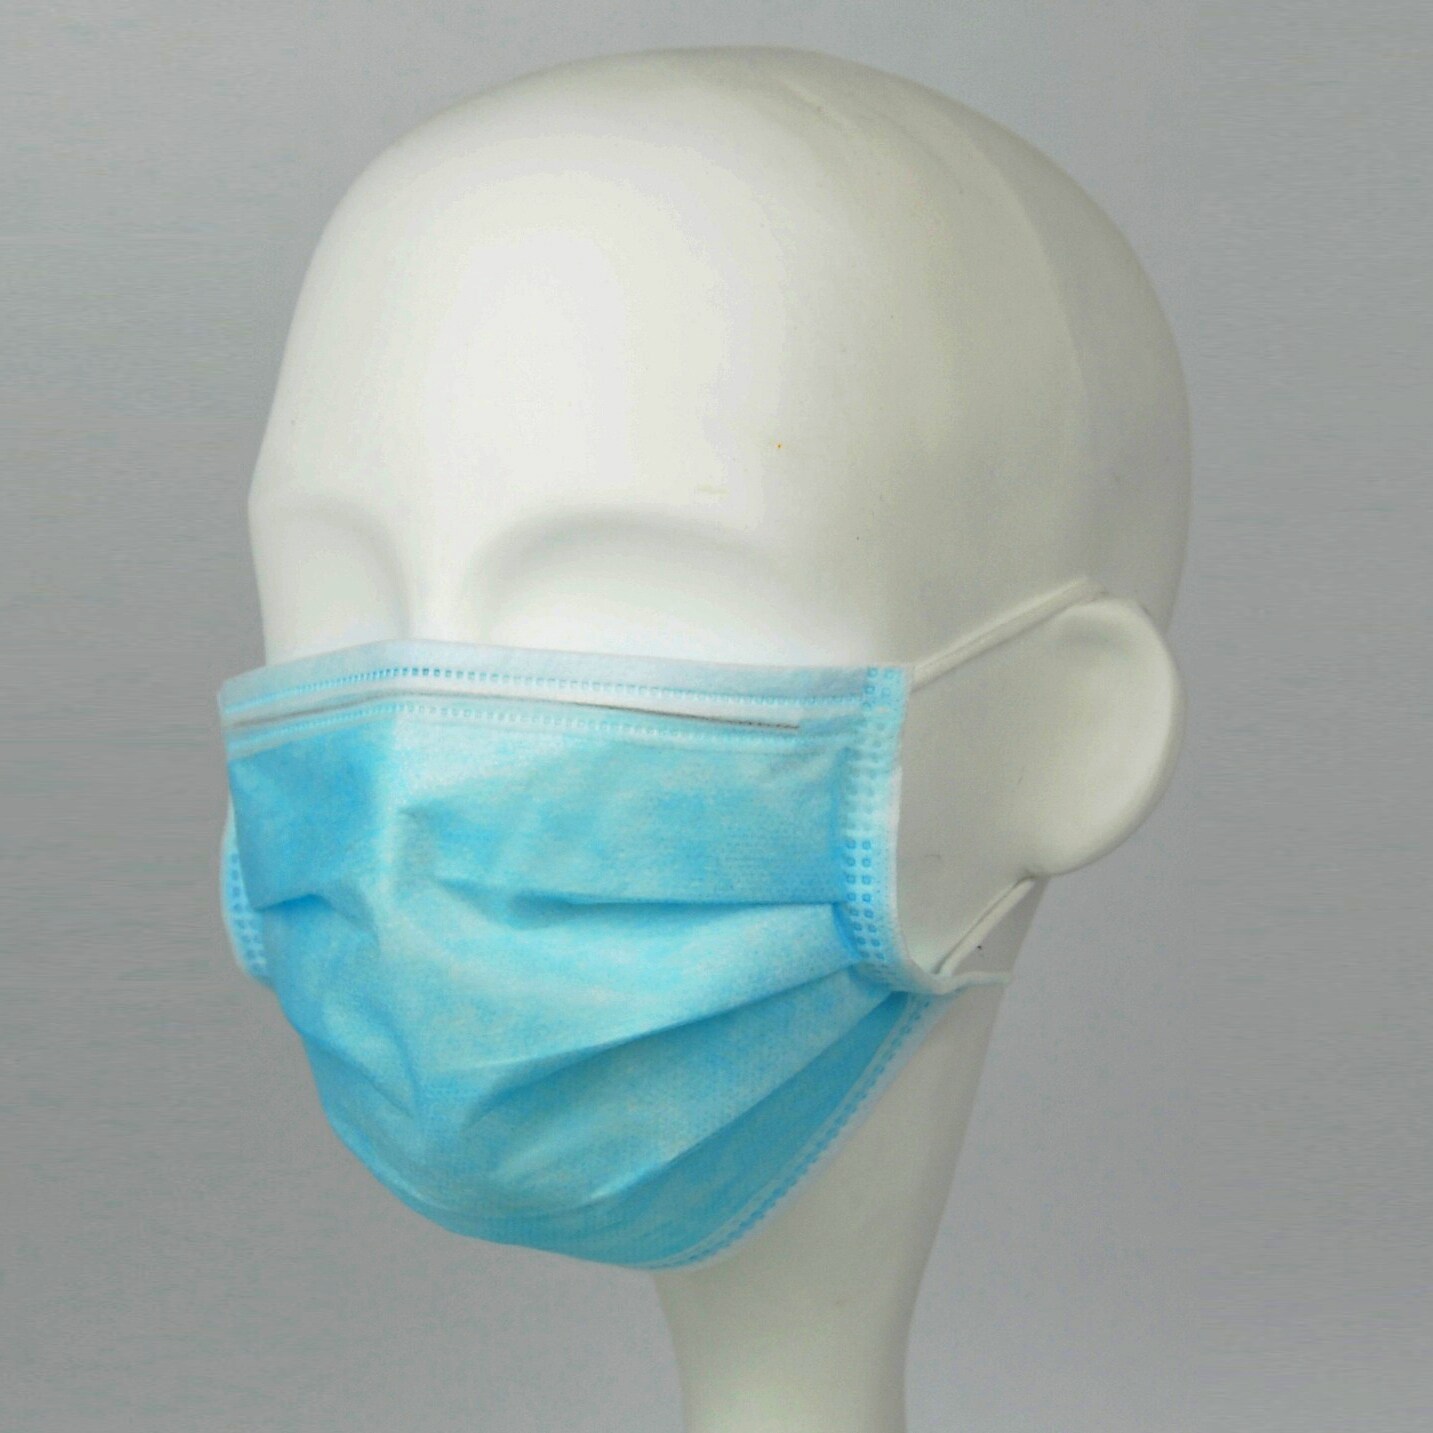 clk extra-d surgical masks